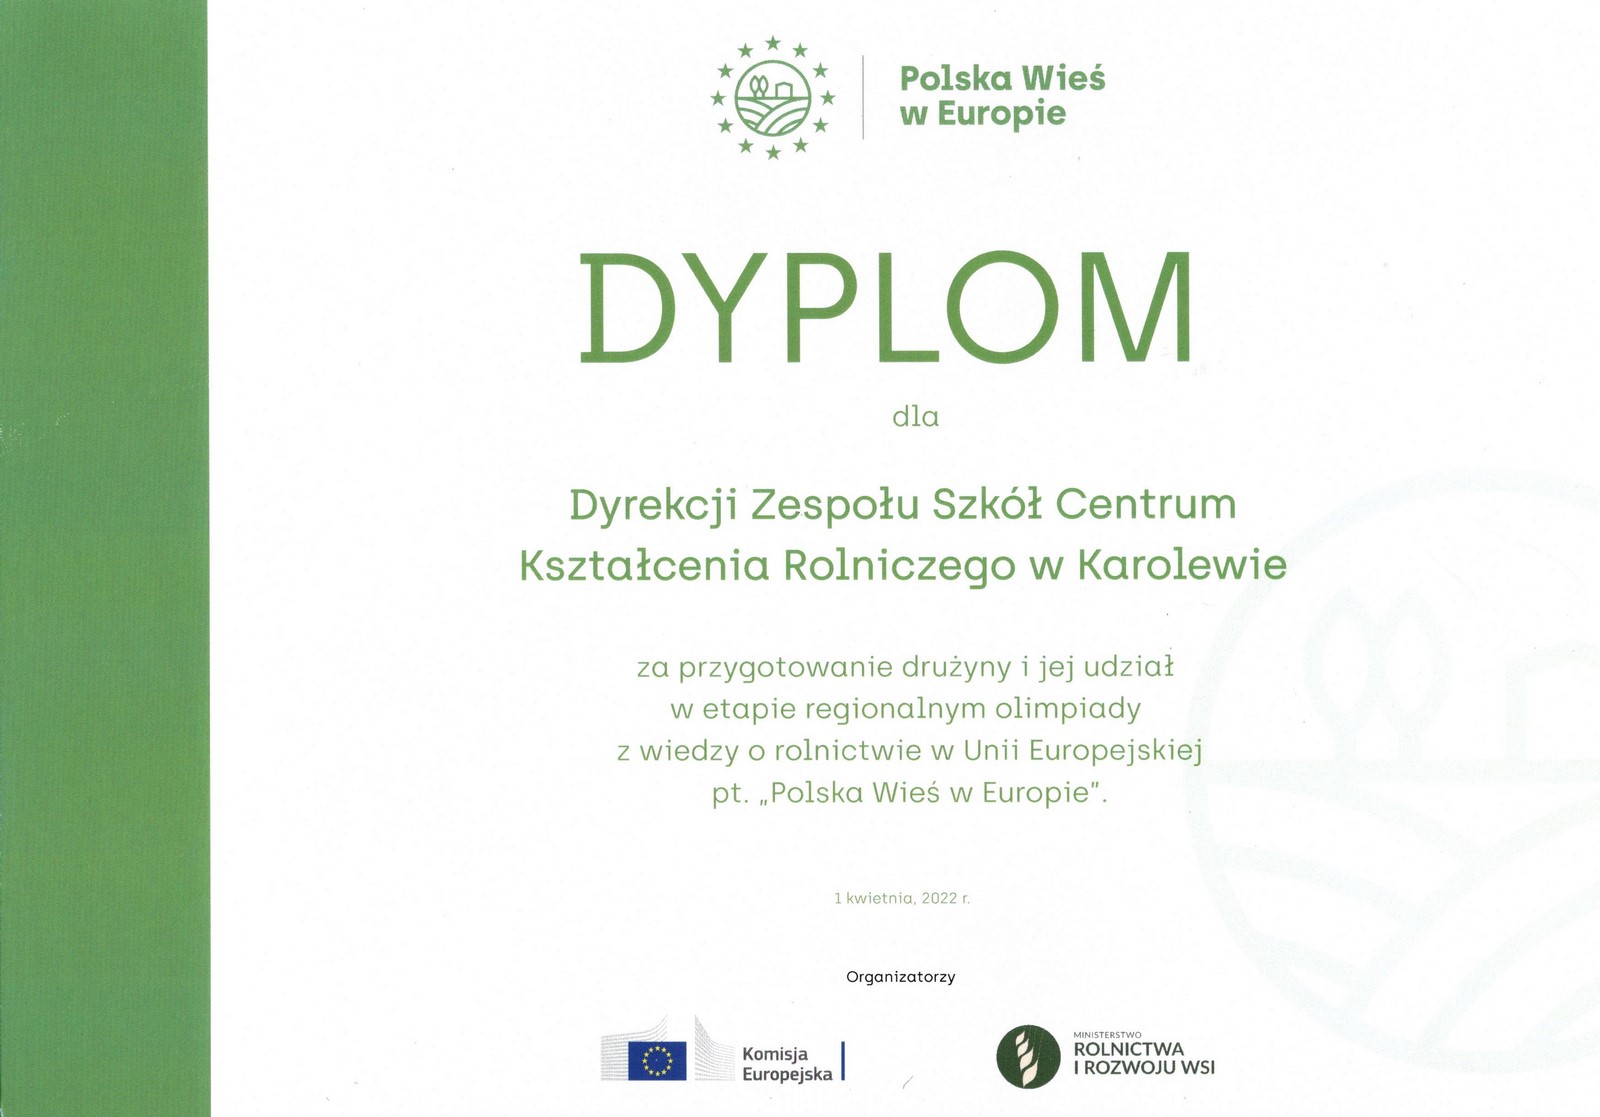 Dyplom-Polska-Wies.jpg